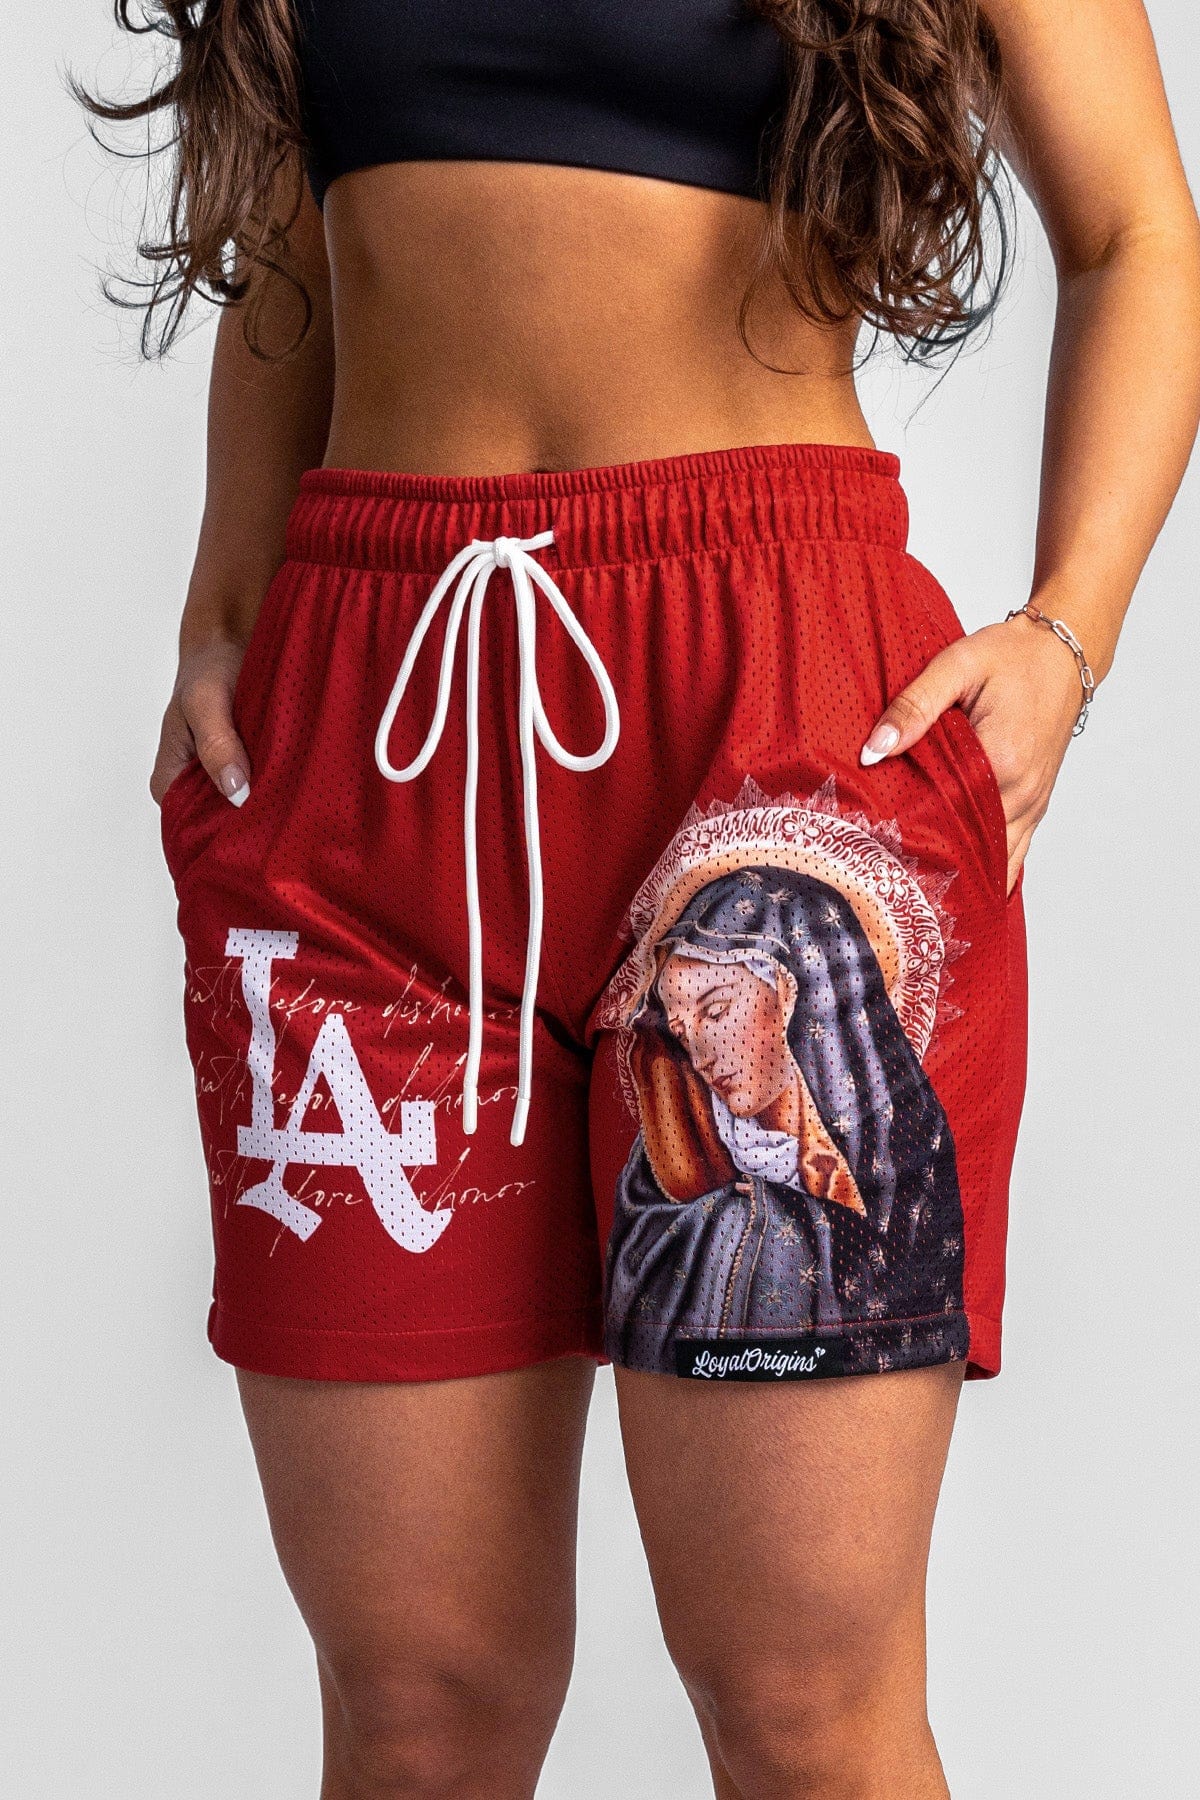 LA 'Ave Maria' Premium Mesh Shorts